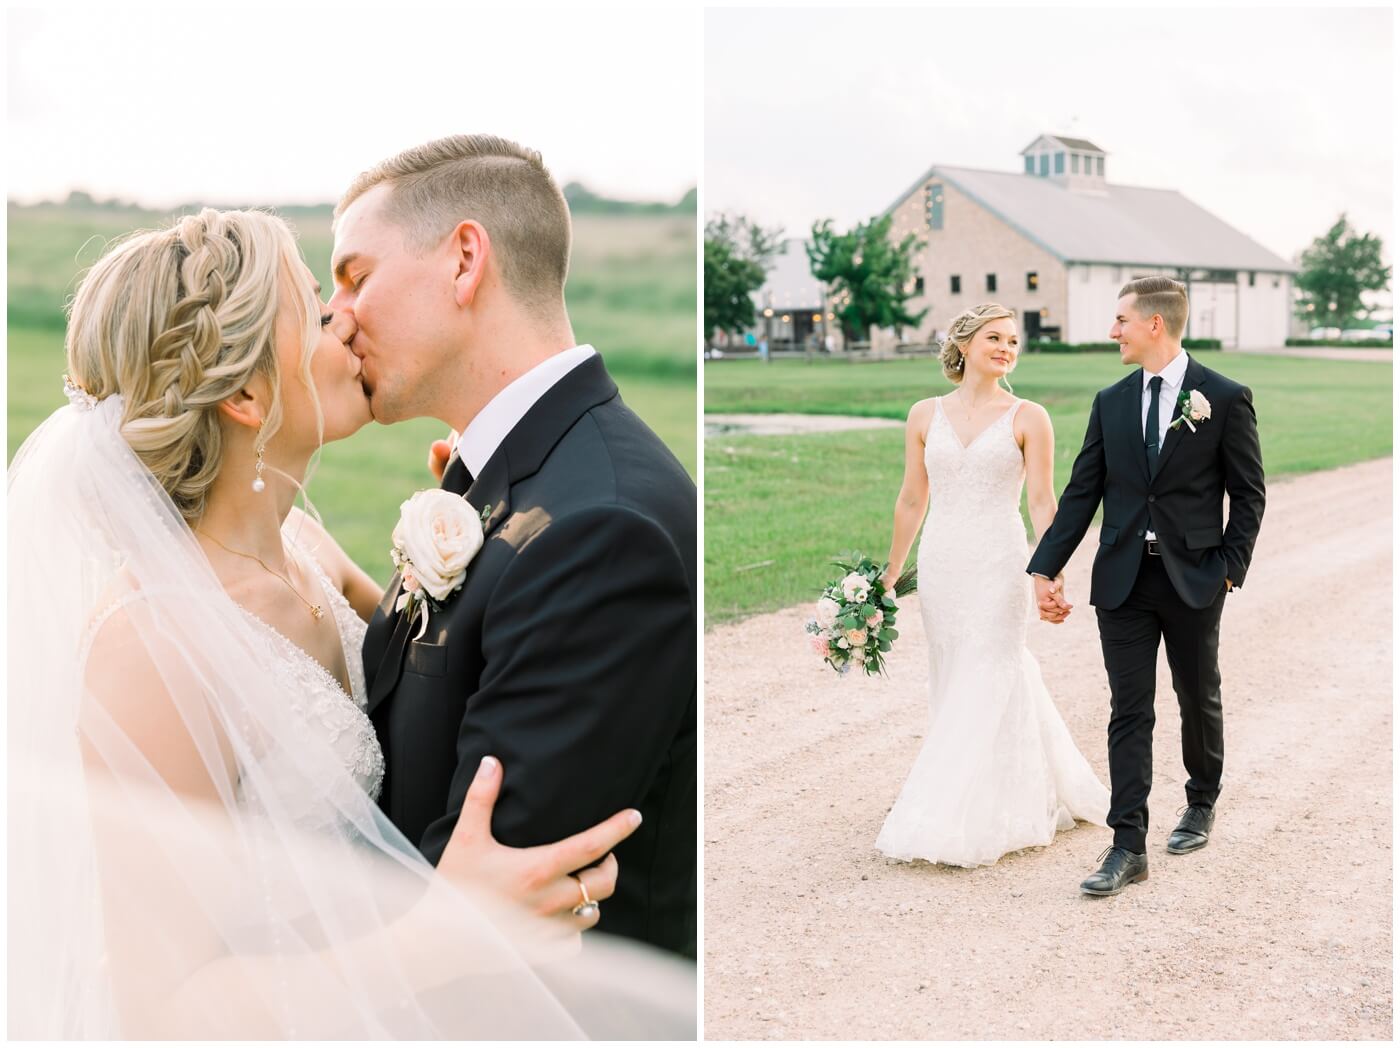 Beckendorff Farms | The couple share a kiss on their wedding day